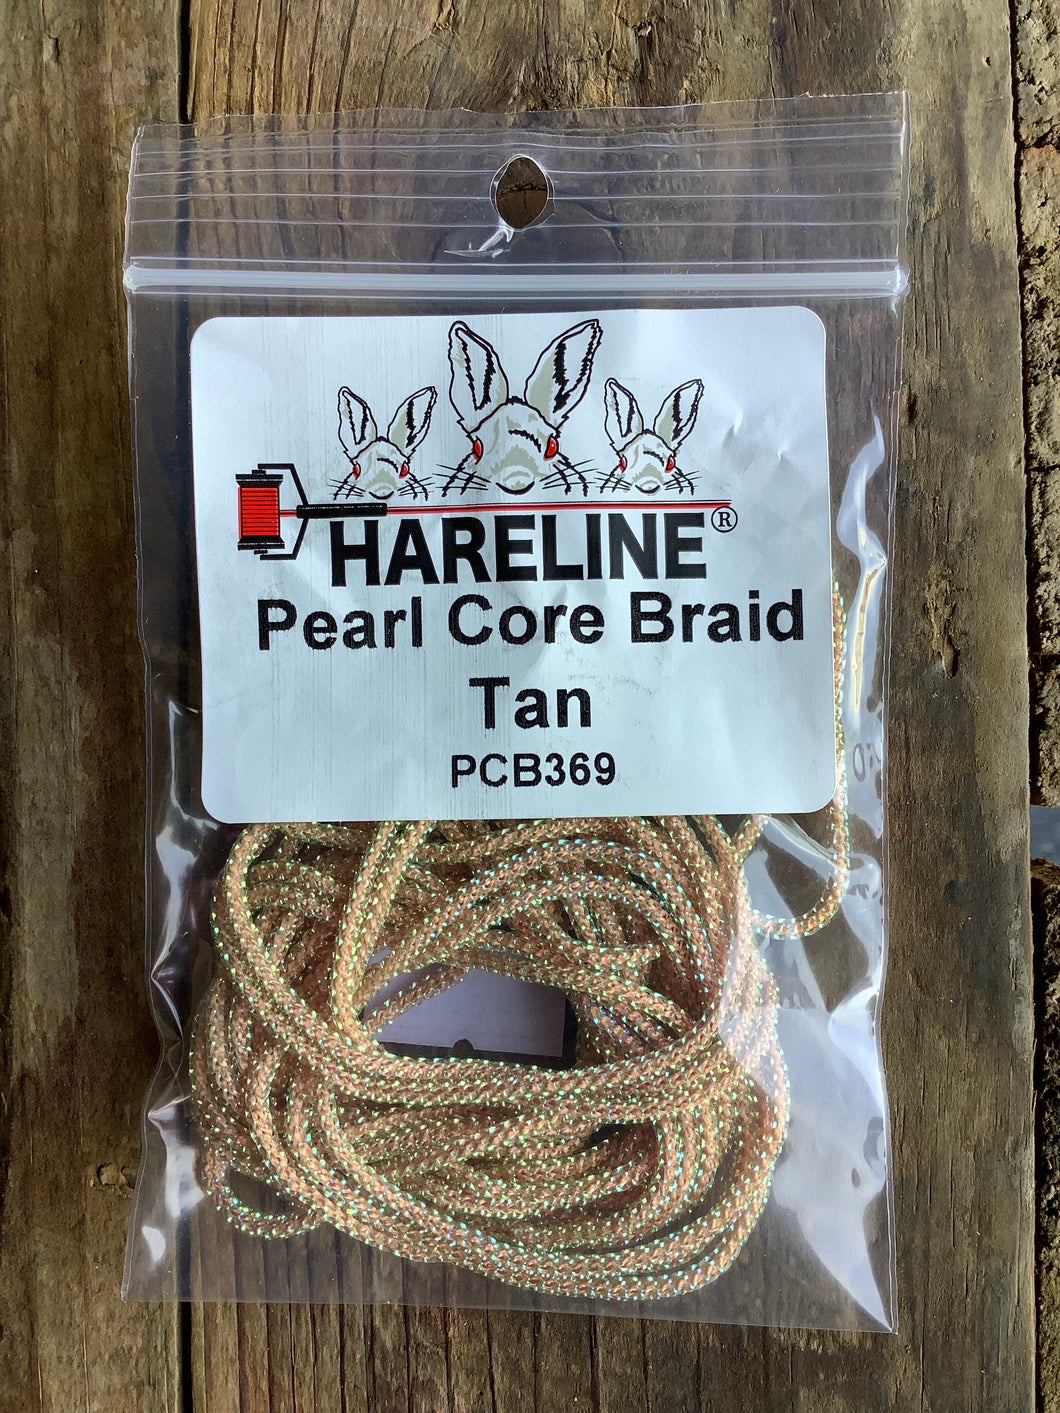 Pearl Core Braid